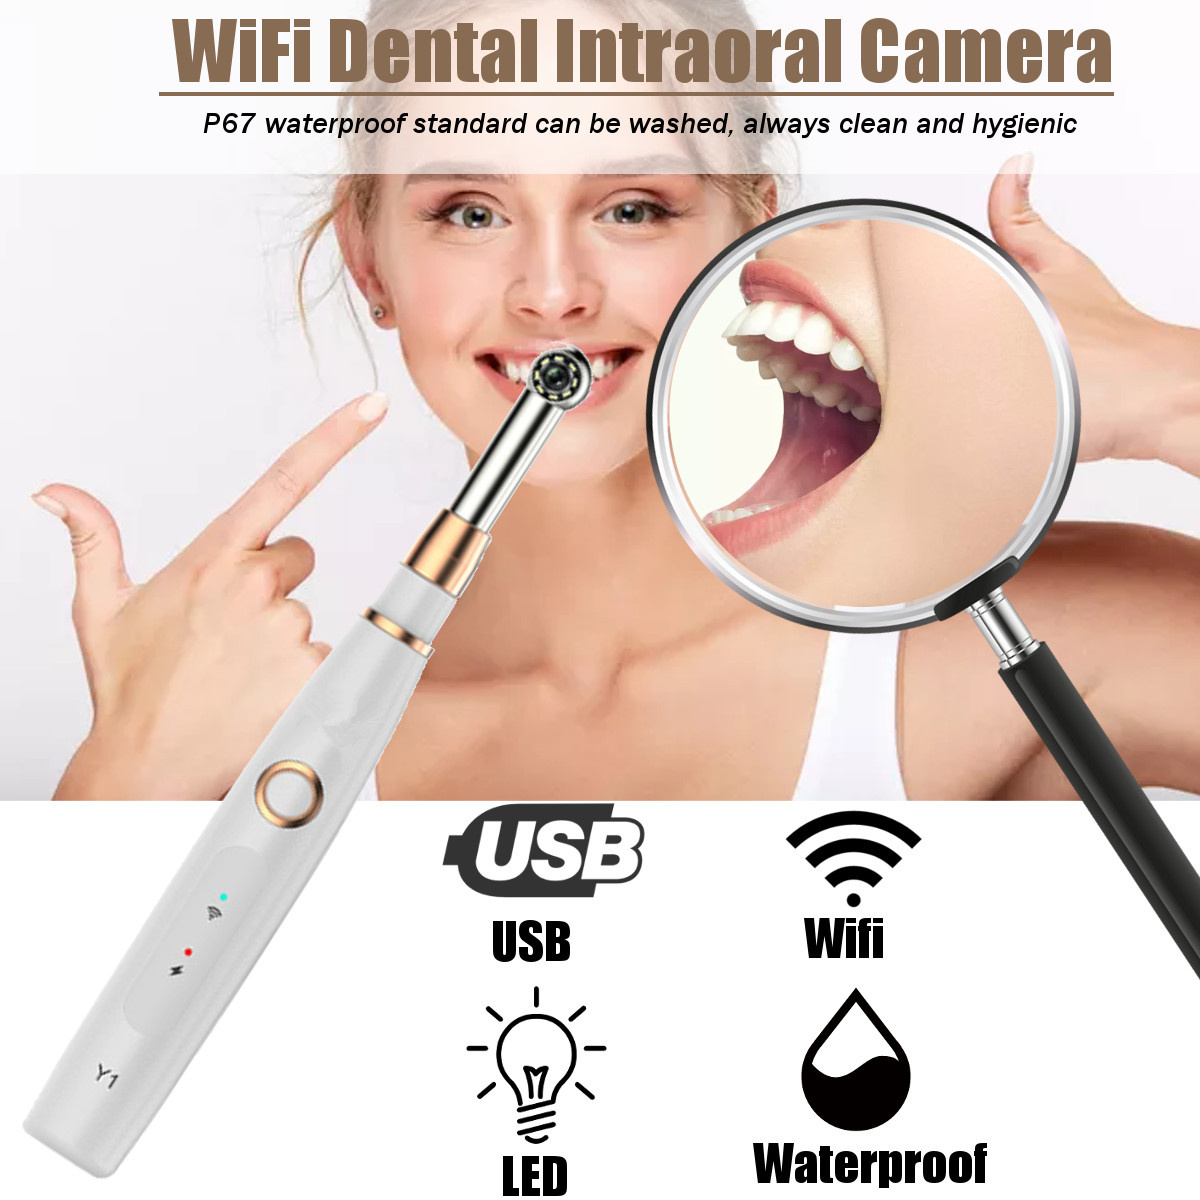 720P WiFi Dental Intraoral Camera Wireless 100W Pixels HD Clear Image Auto Focus Dental Camera Camera Mirrors